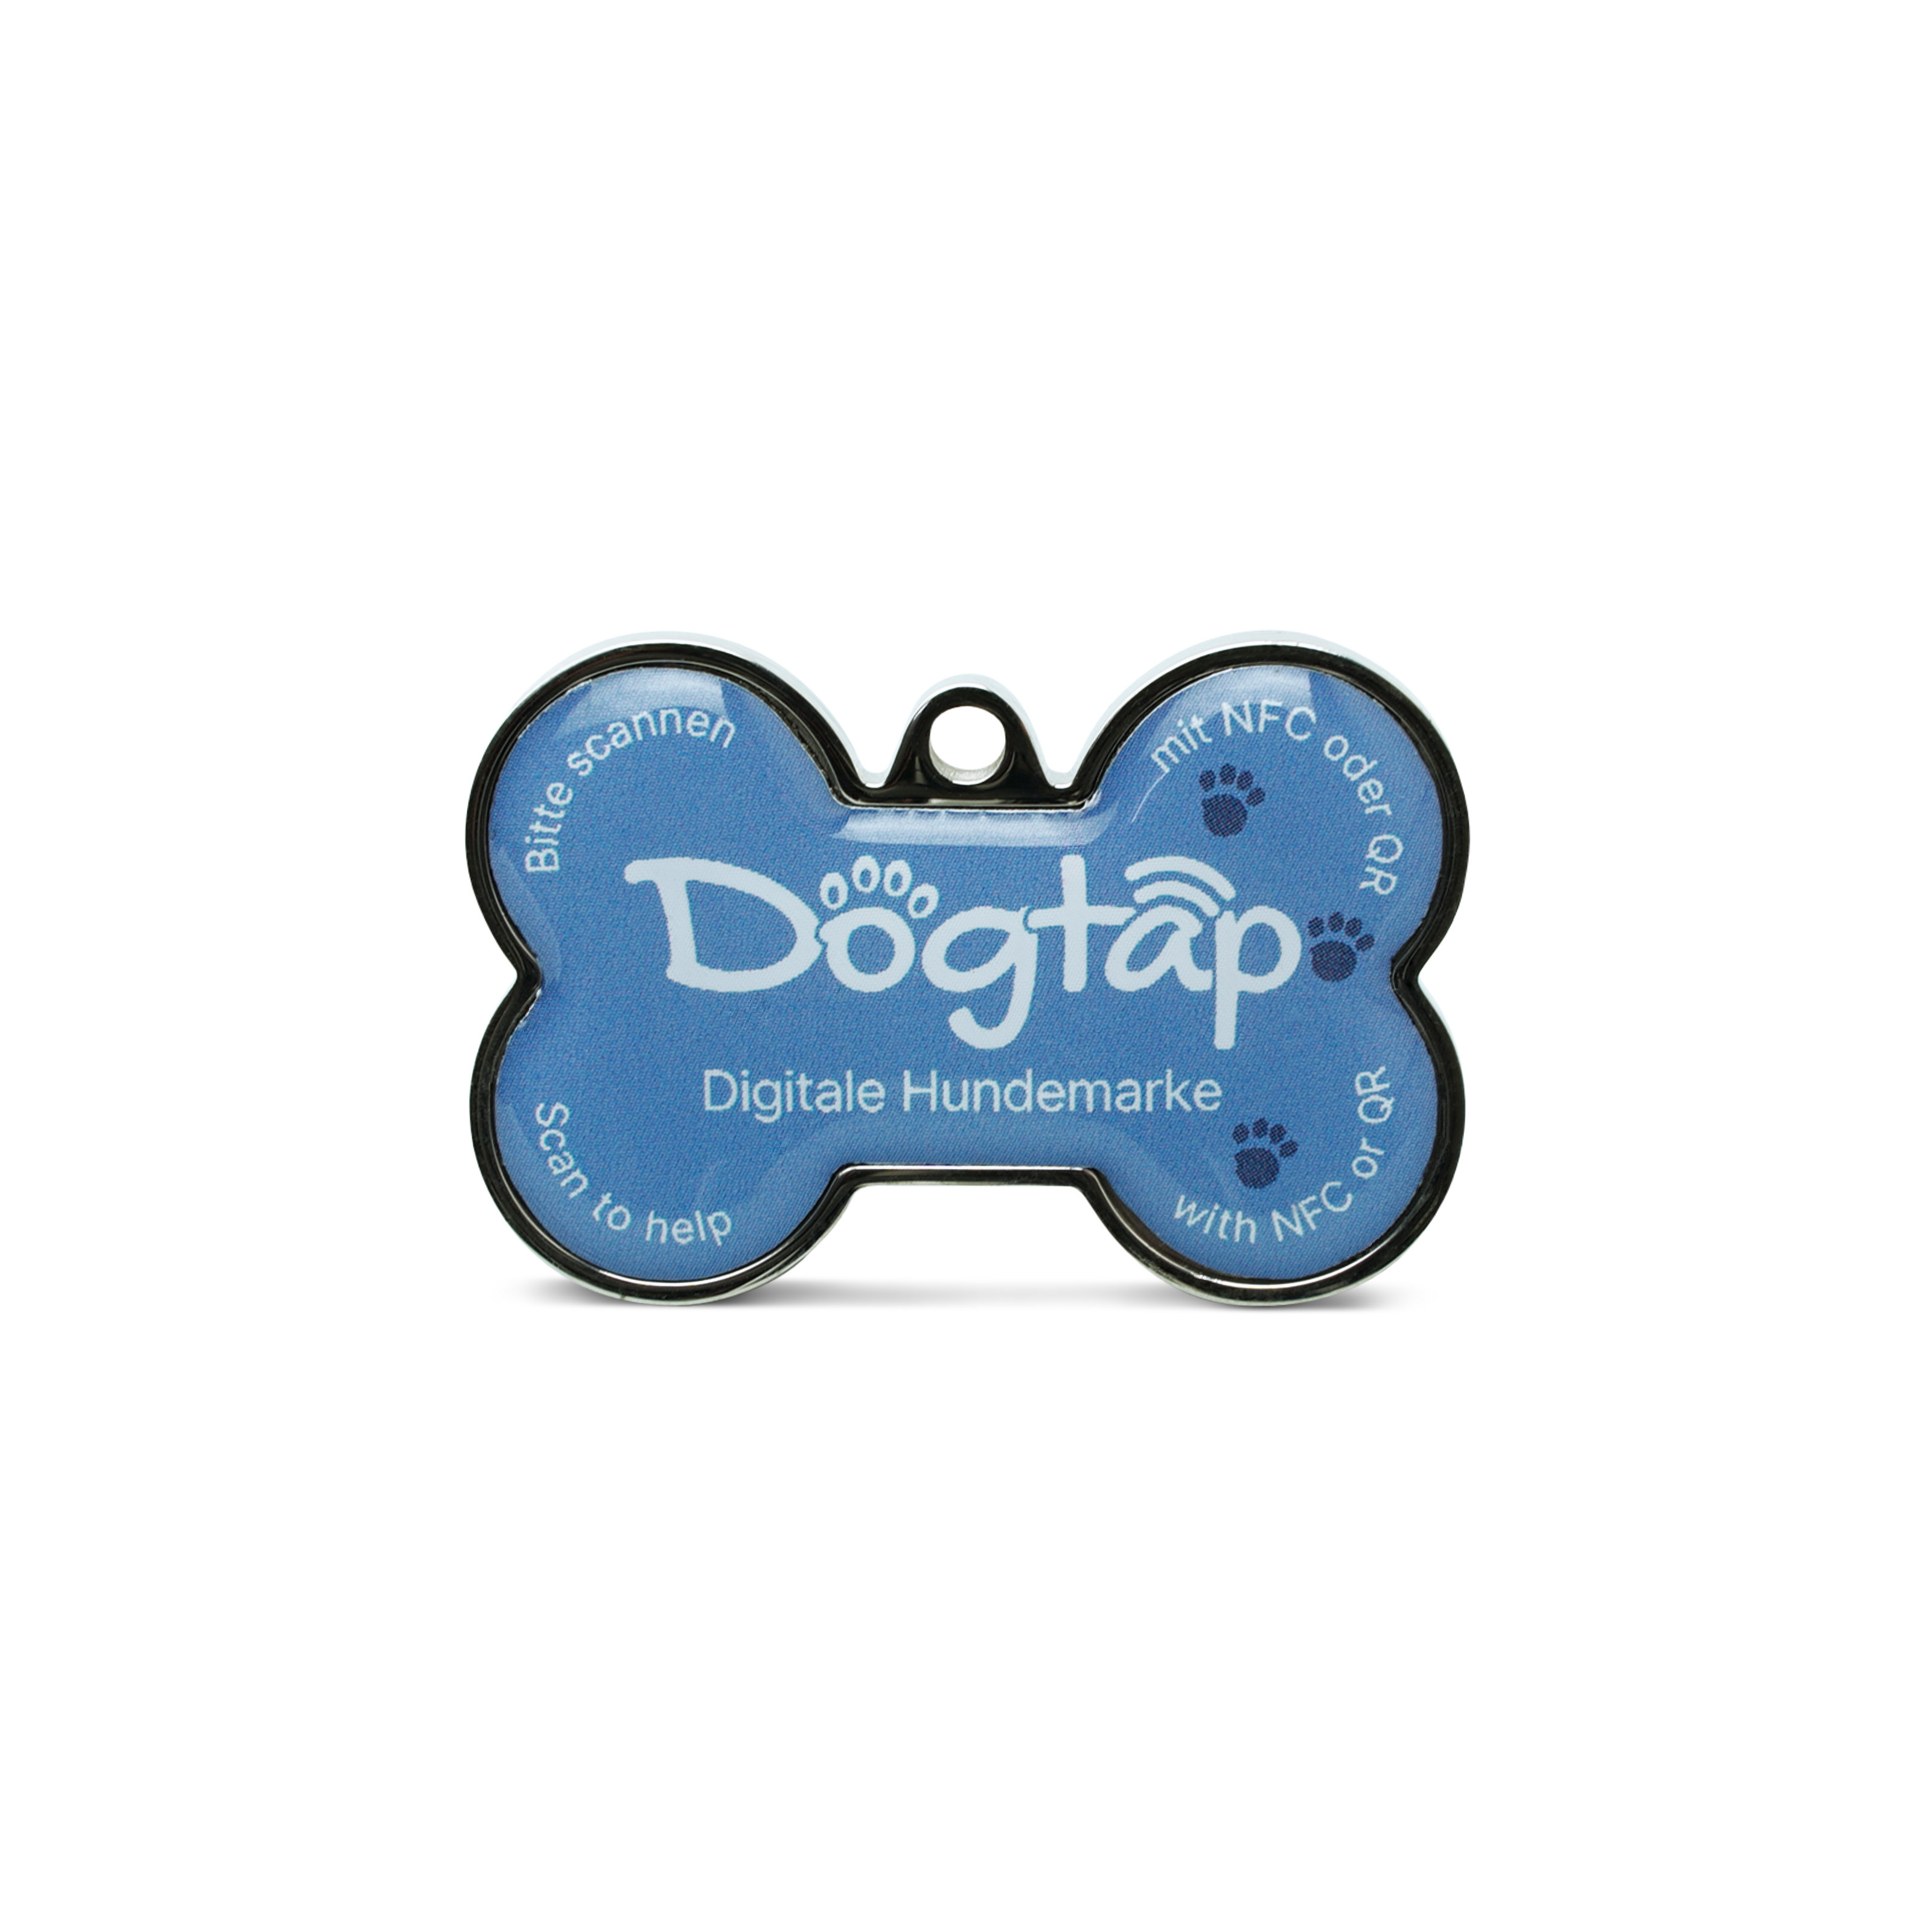 Dogtap Solid - Digitale Hundemarke - PVC / Metall - 41,6 x 28,5 x 4,6 mm - blau